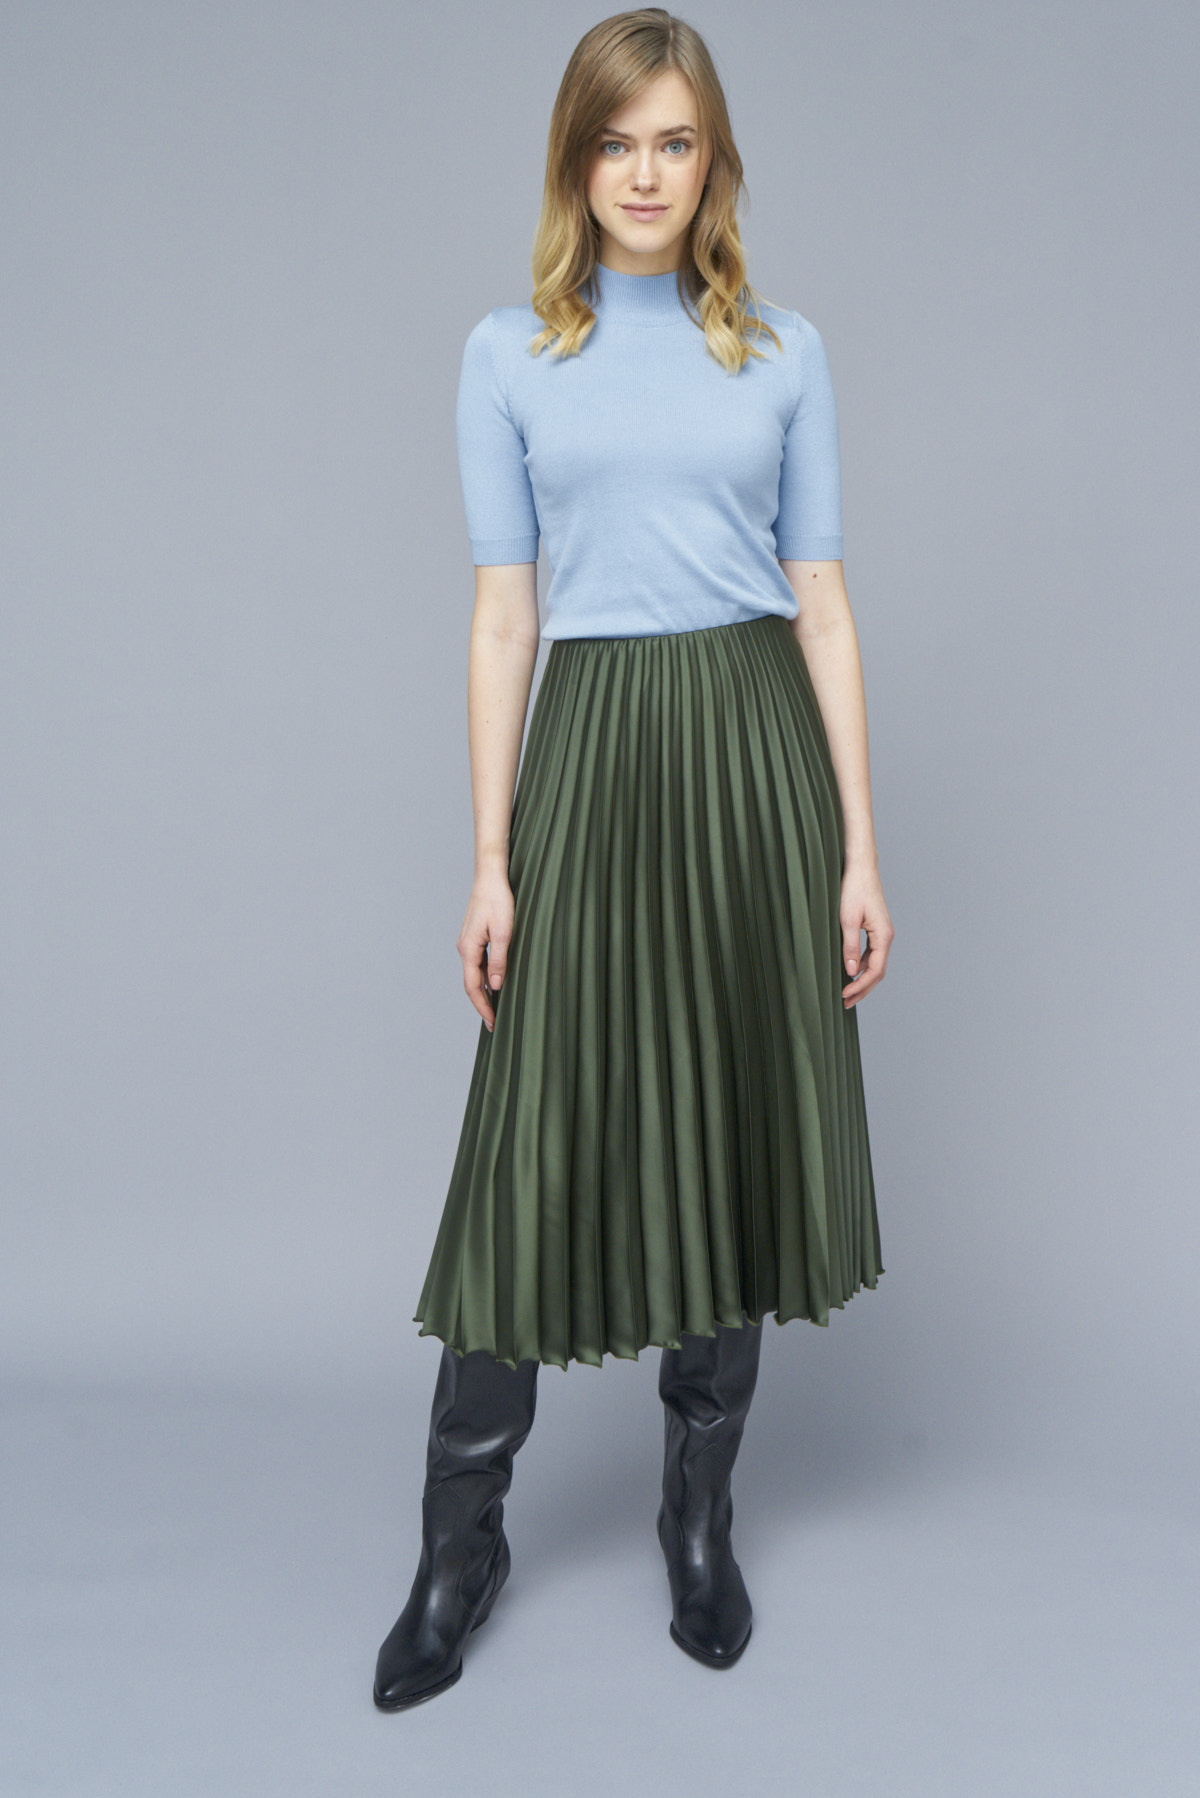 Khaki pleated midi skirt, photo 2